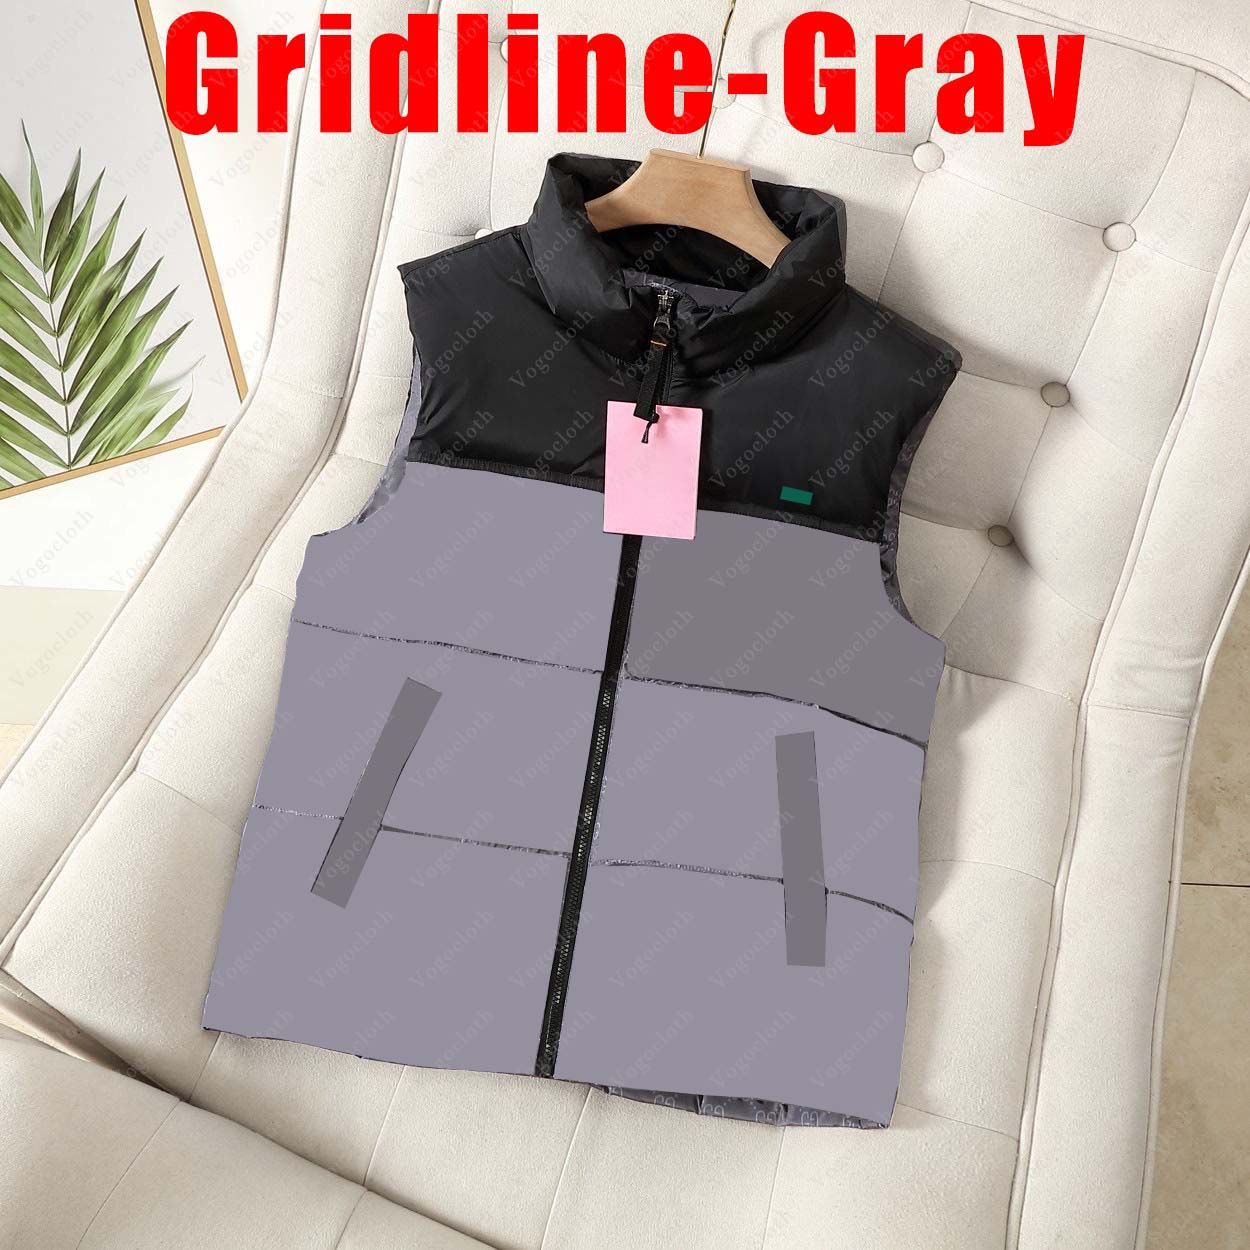 Gridline-Grau